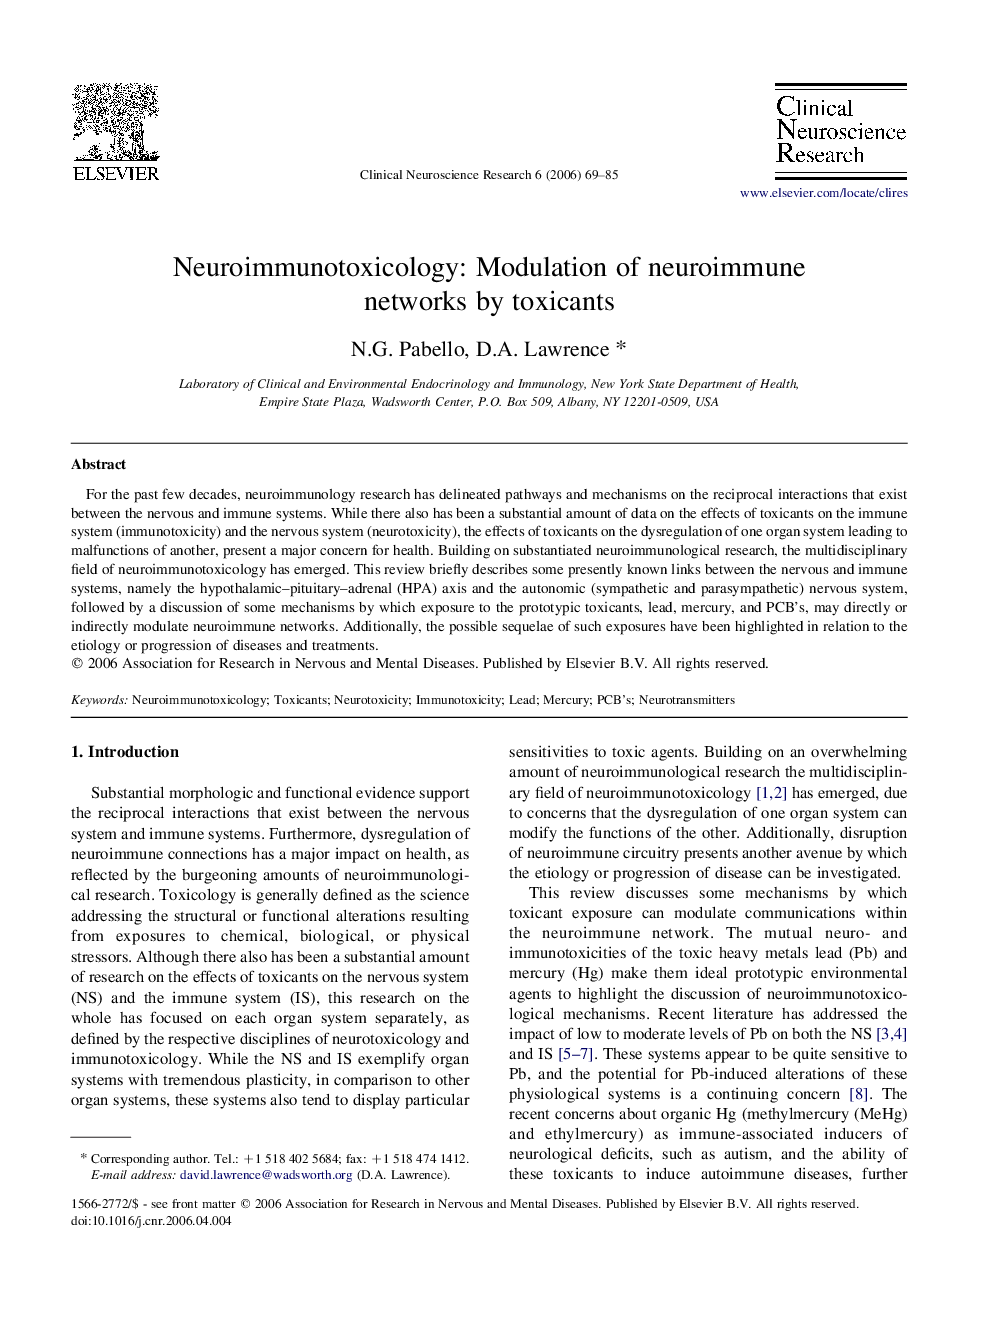 Neuroimmunotoxicology: Modulation of neuroimmune networks by toxicants